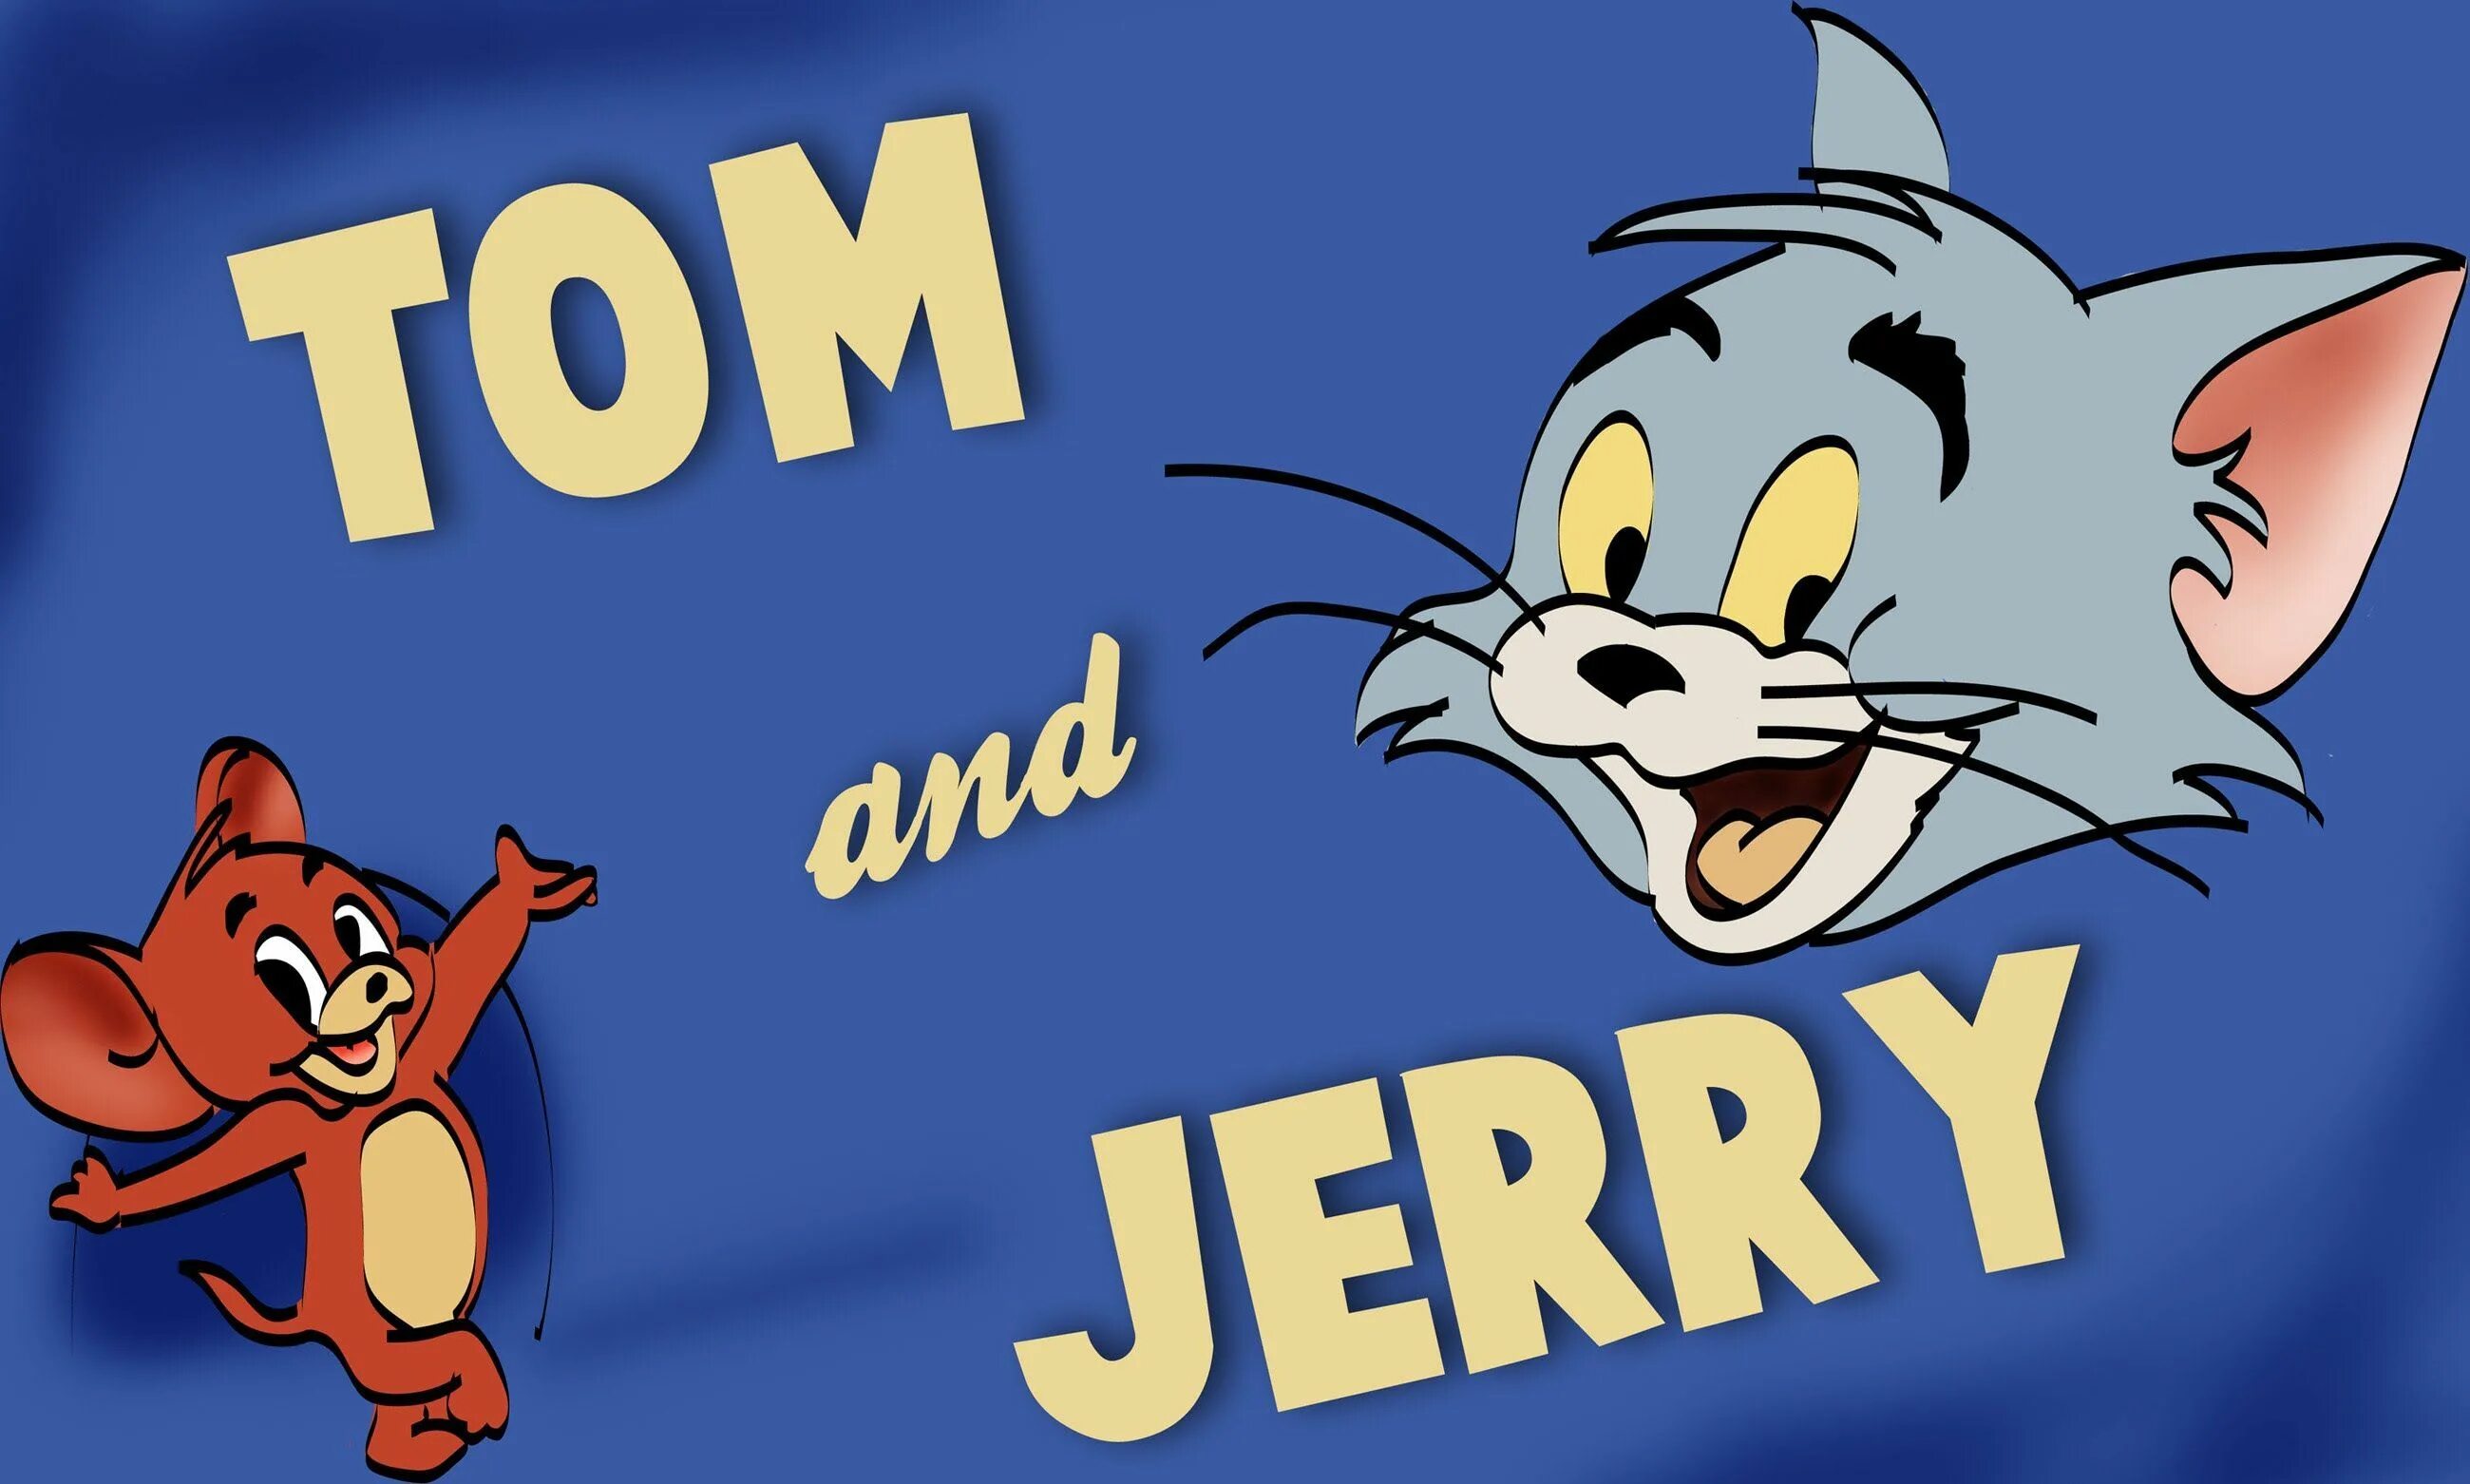 Конец 1 тома. Tom and Jerry. Том и Джерри обложка мультфильма. NJV B LKTHB. Том и Джерри картинки.